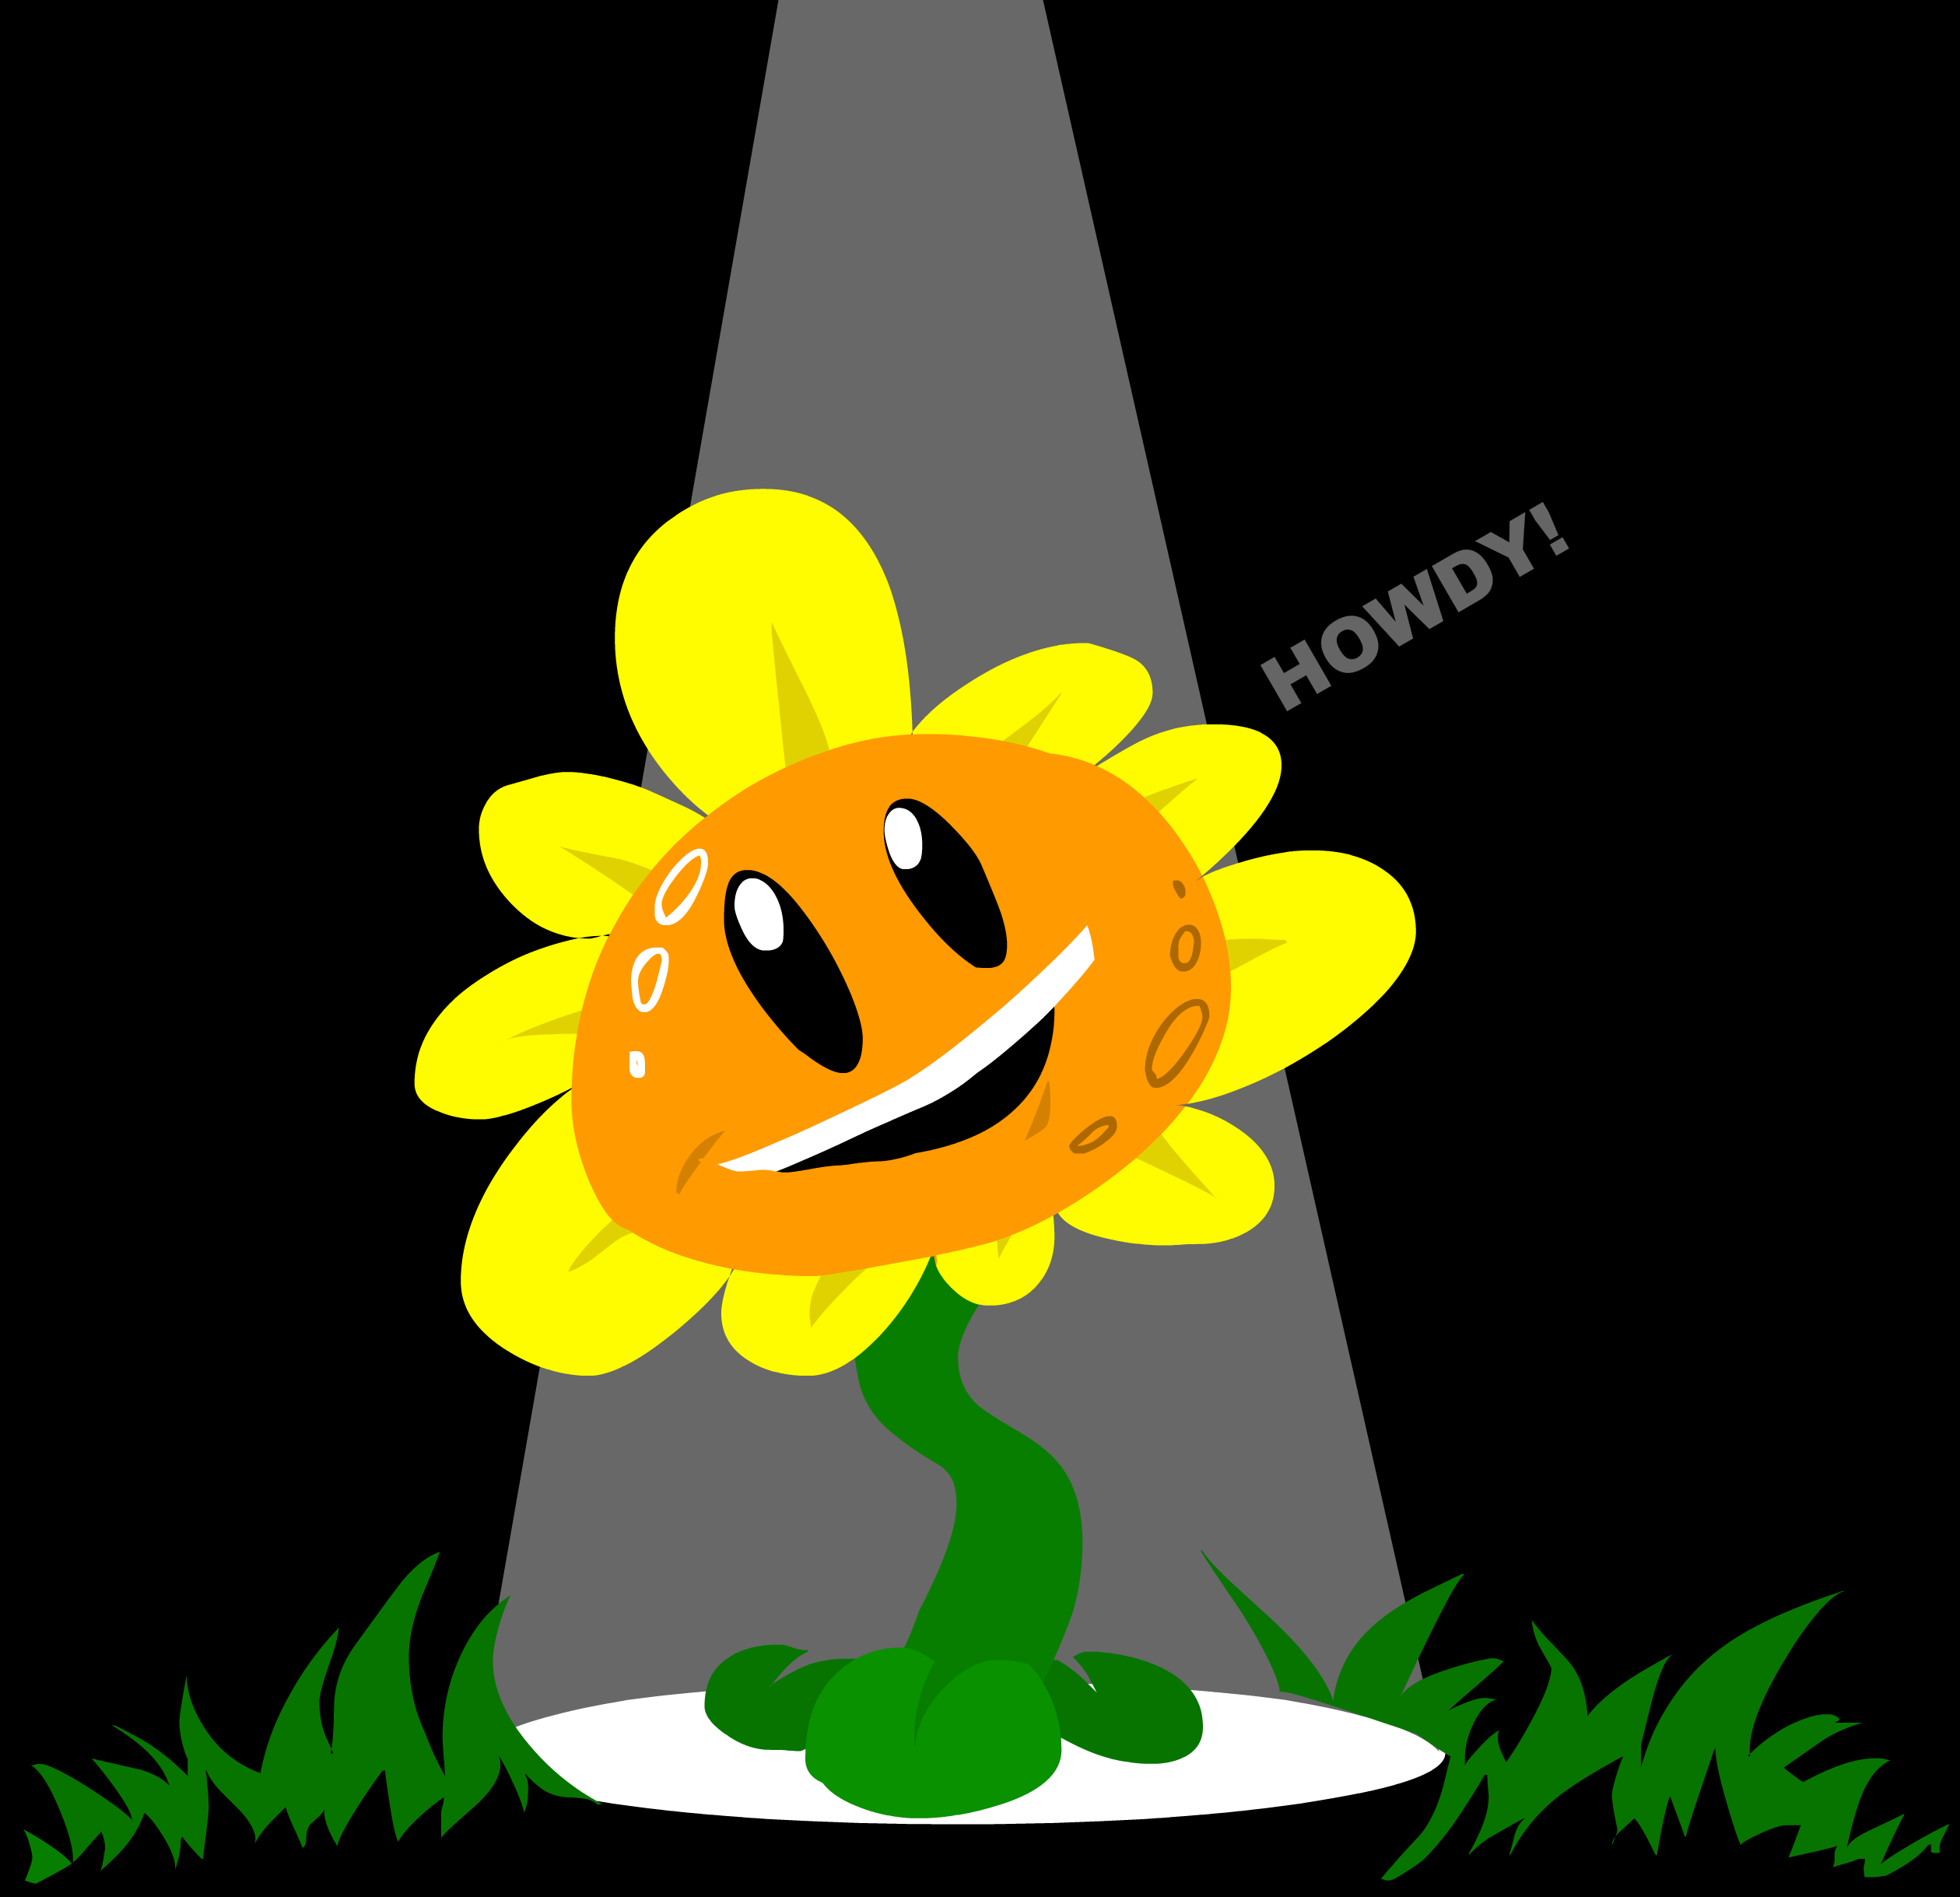 Plants vs Zombies 2 Sunflower(Halloween) (R) by illustation16 on DeviantArt